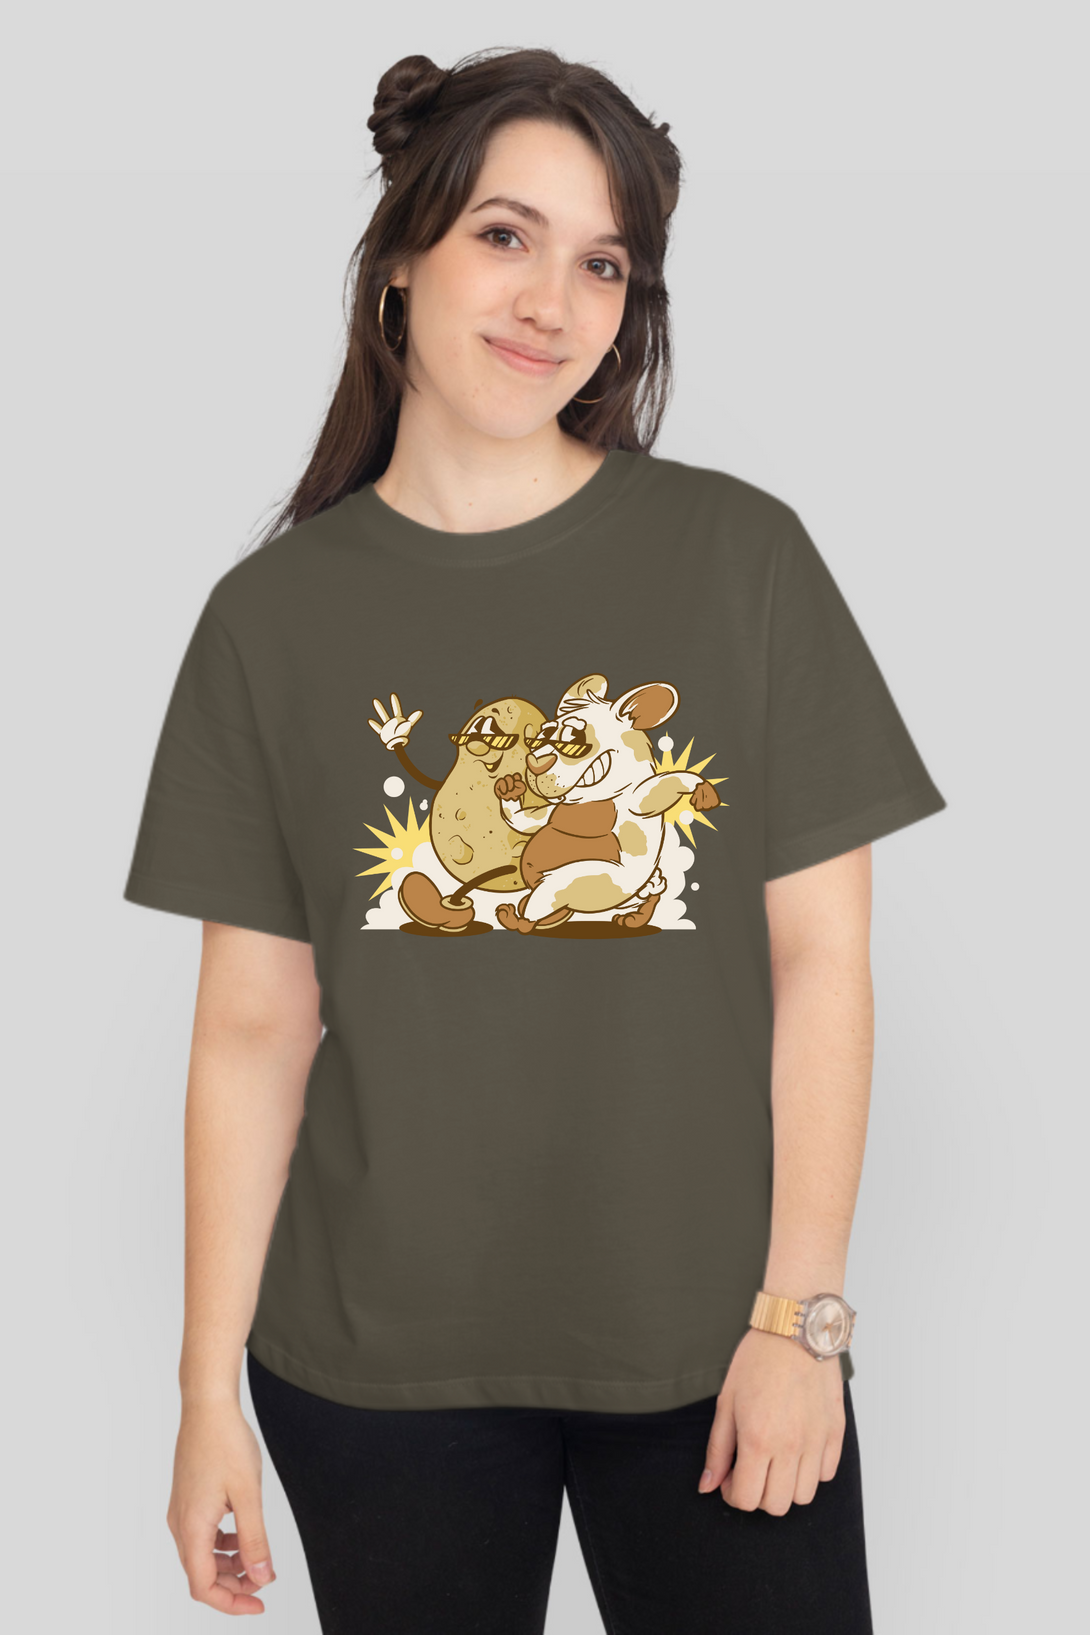 Tater & Piggie Printed T-Shirt For Women - WowWaves - 10